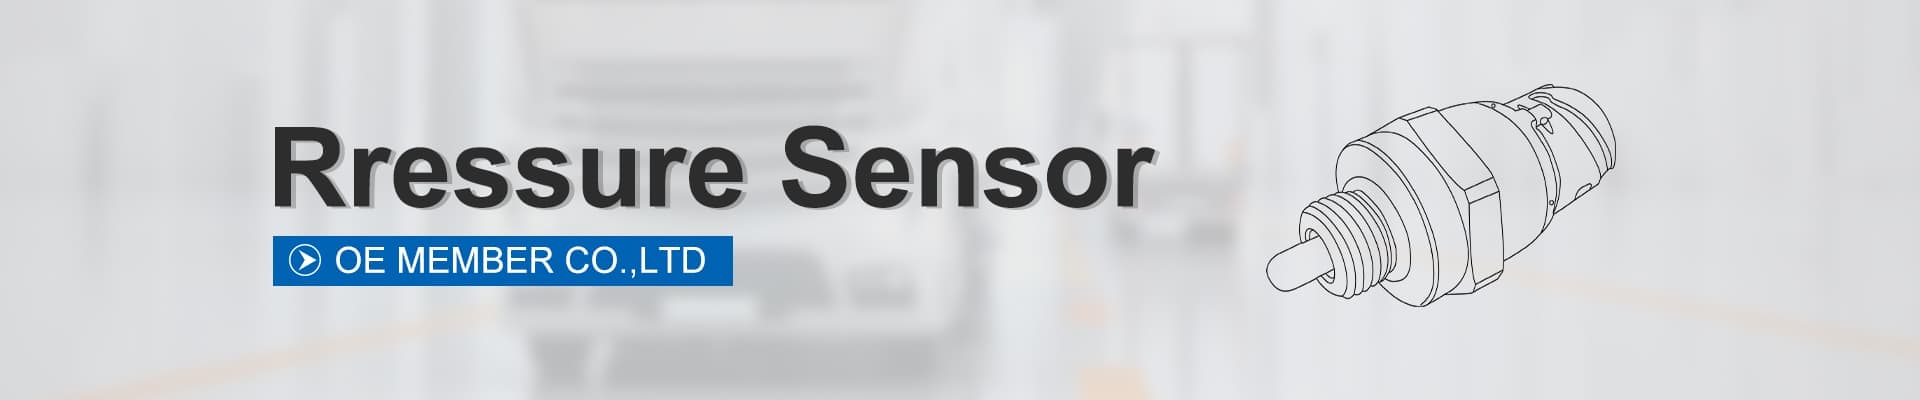 How to choose a good pressure sensor?